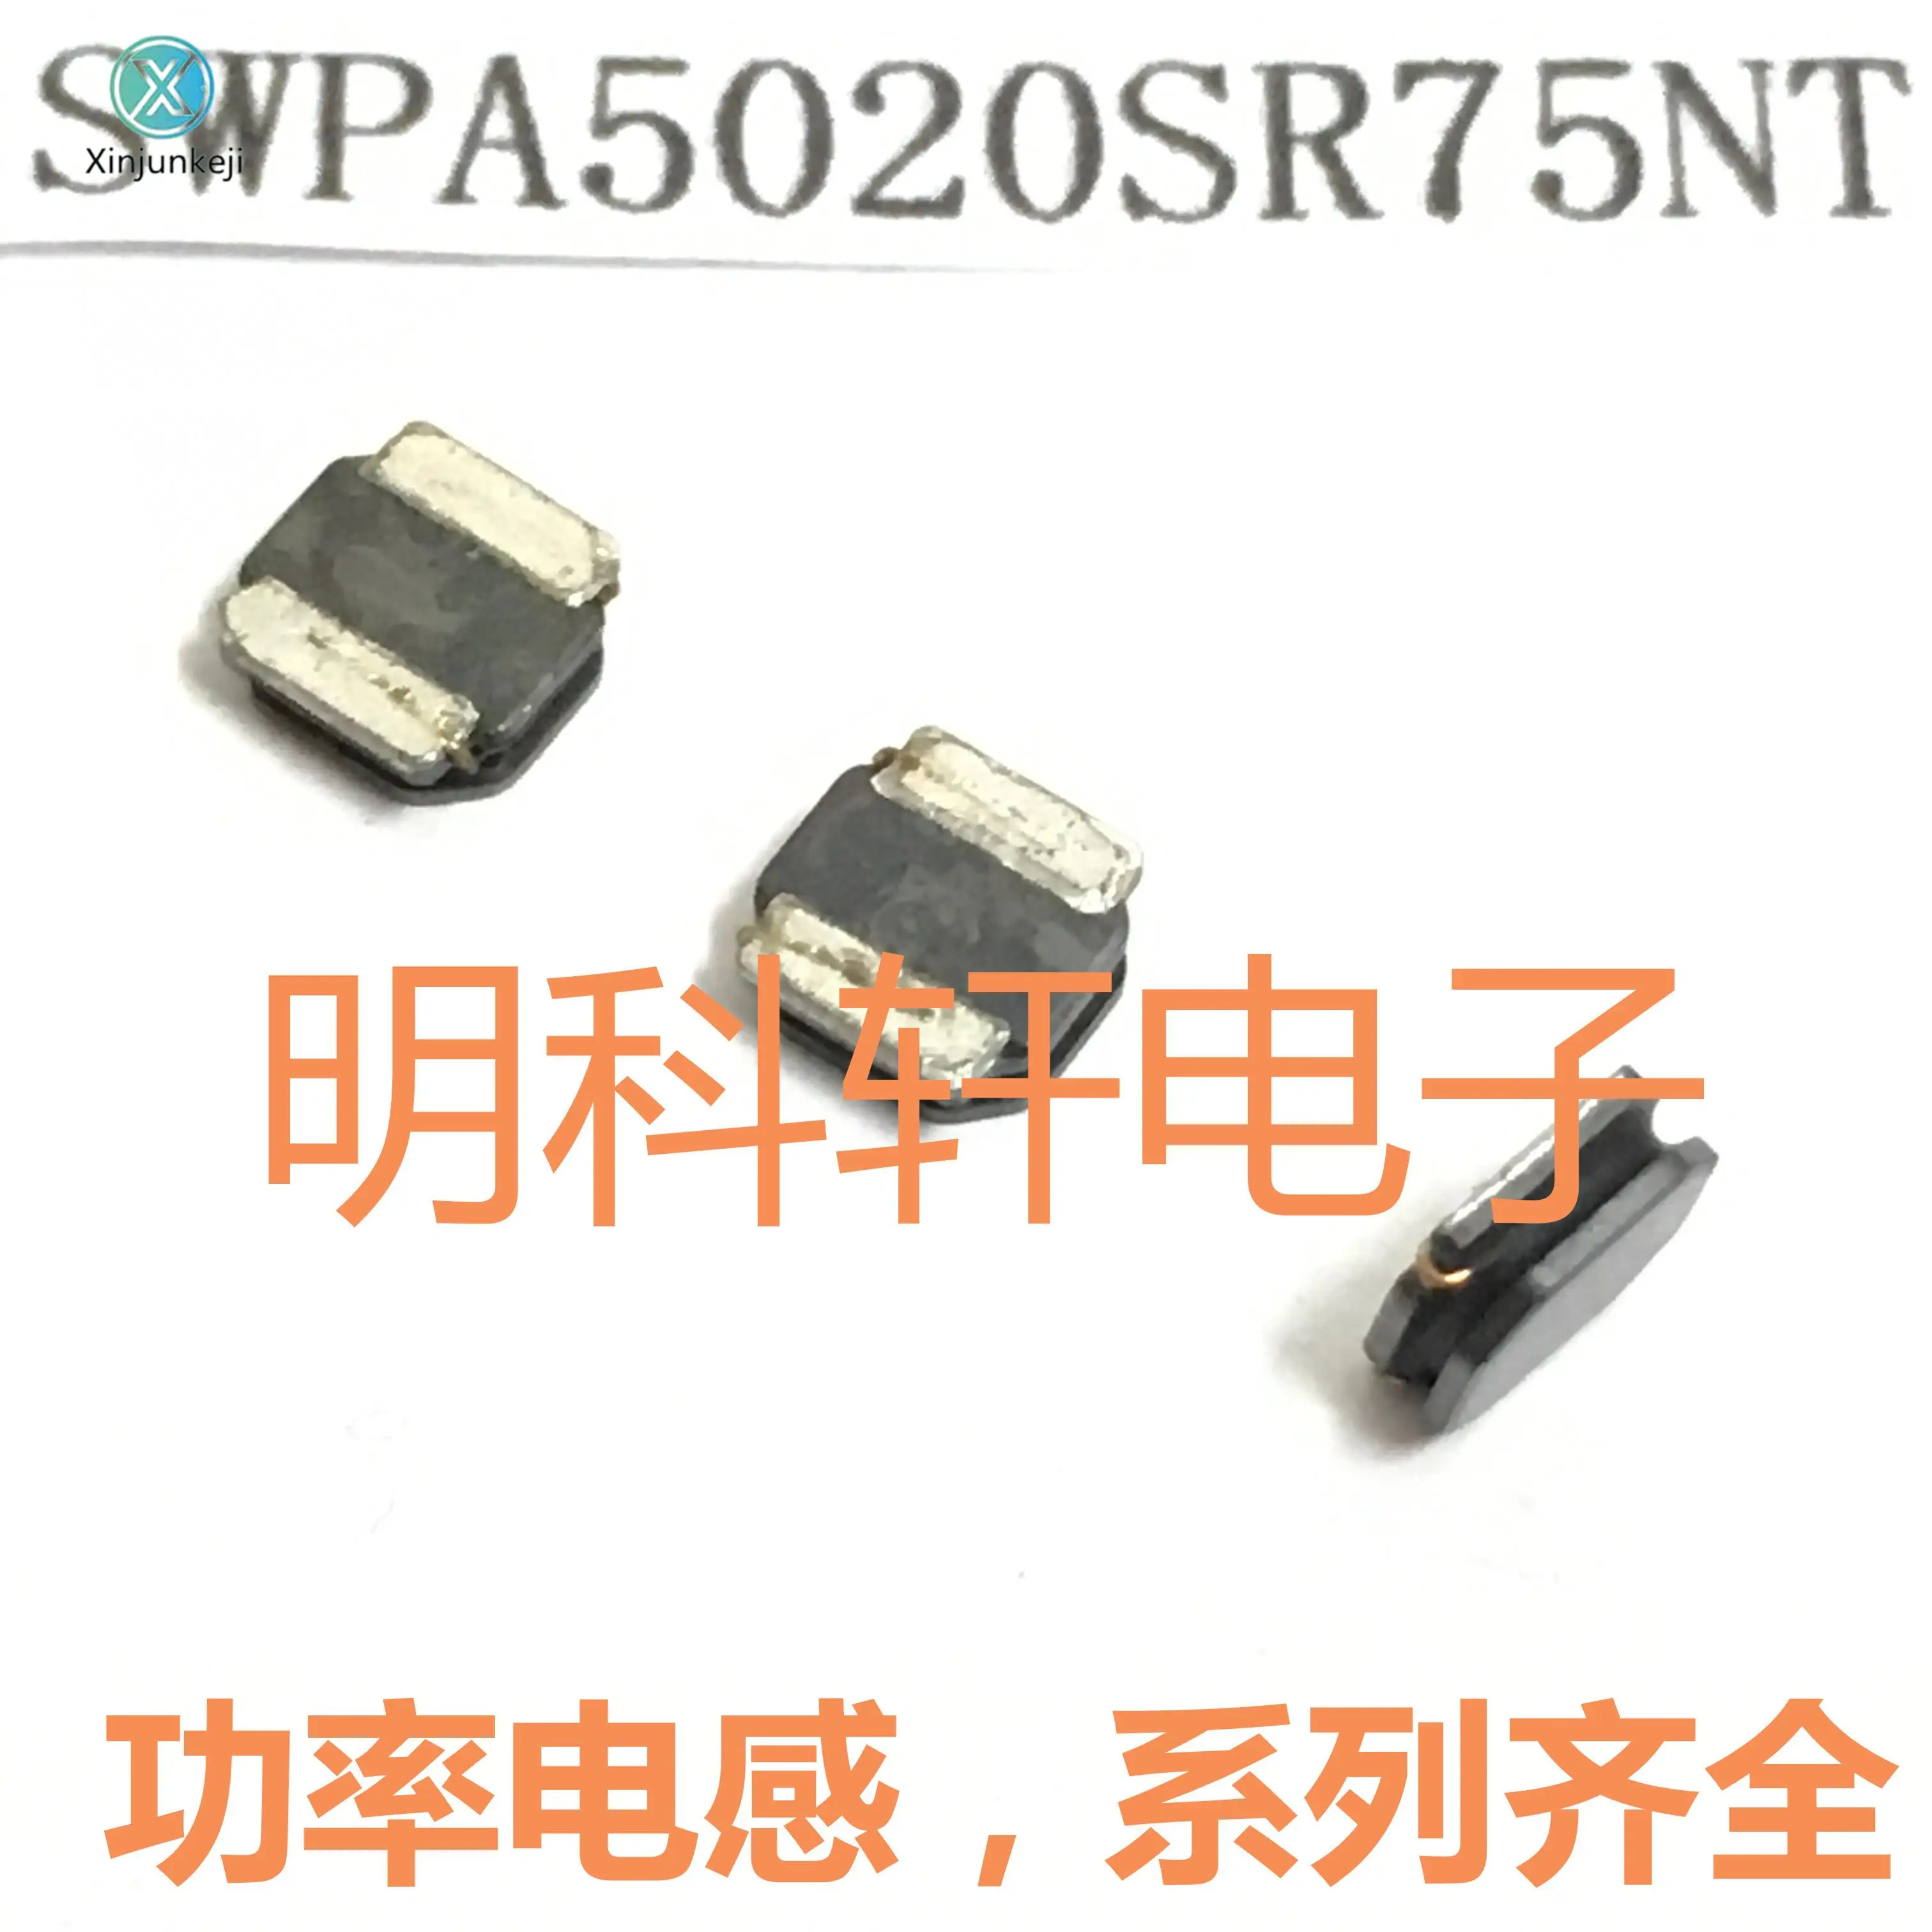 

30pcs orginal new SWPA5020SR75NT SMD power inductor 0.75UH 5.0*5.0*2.0